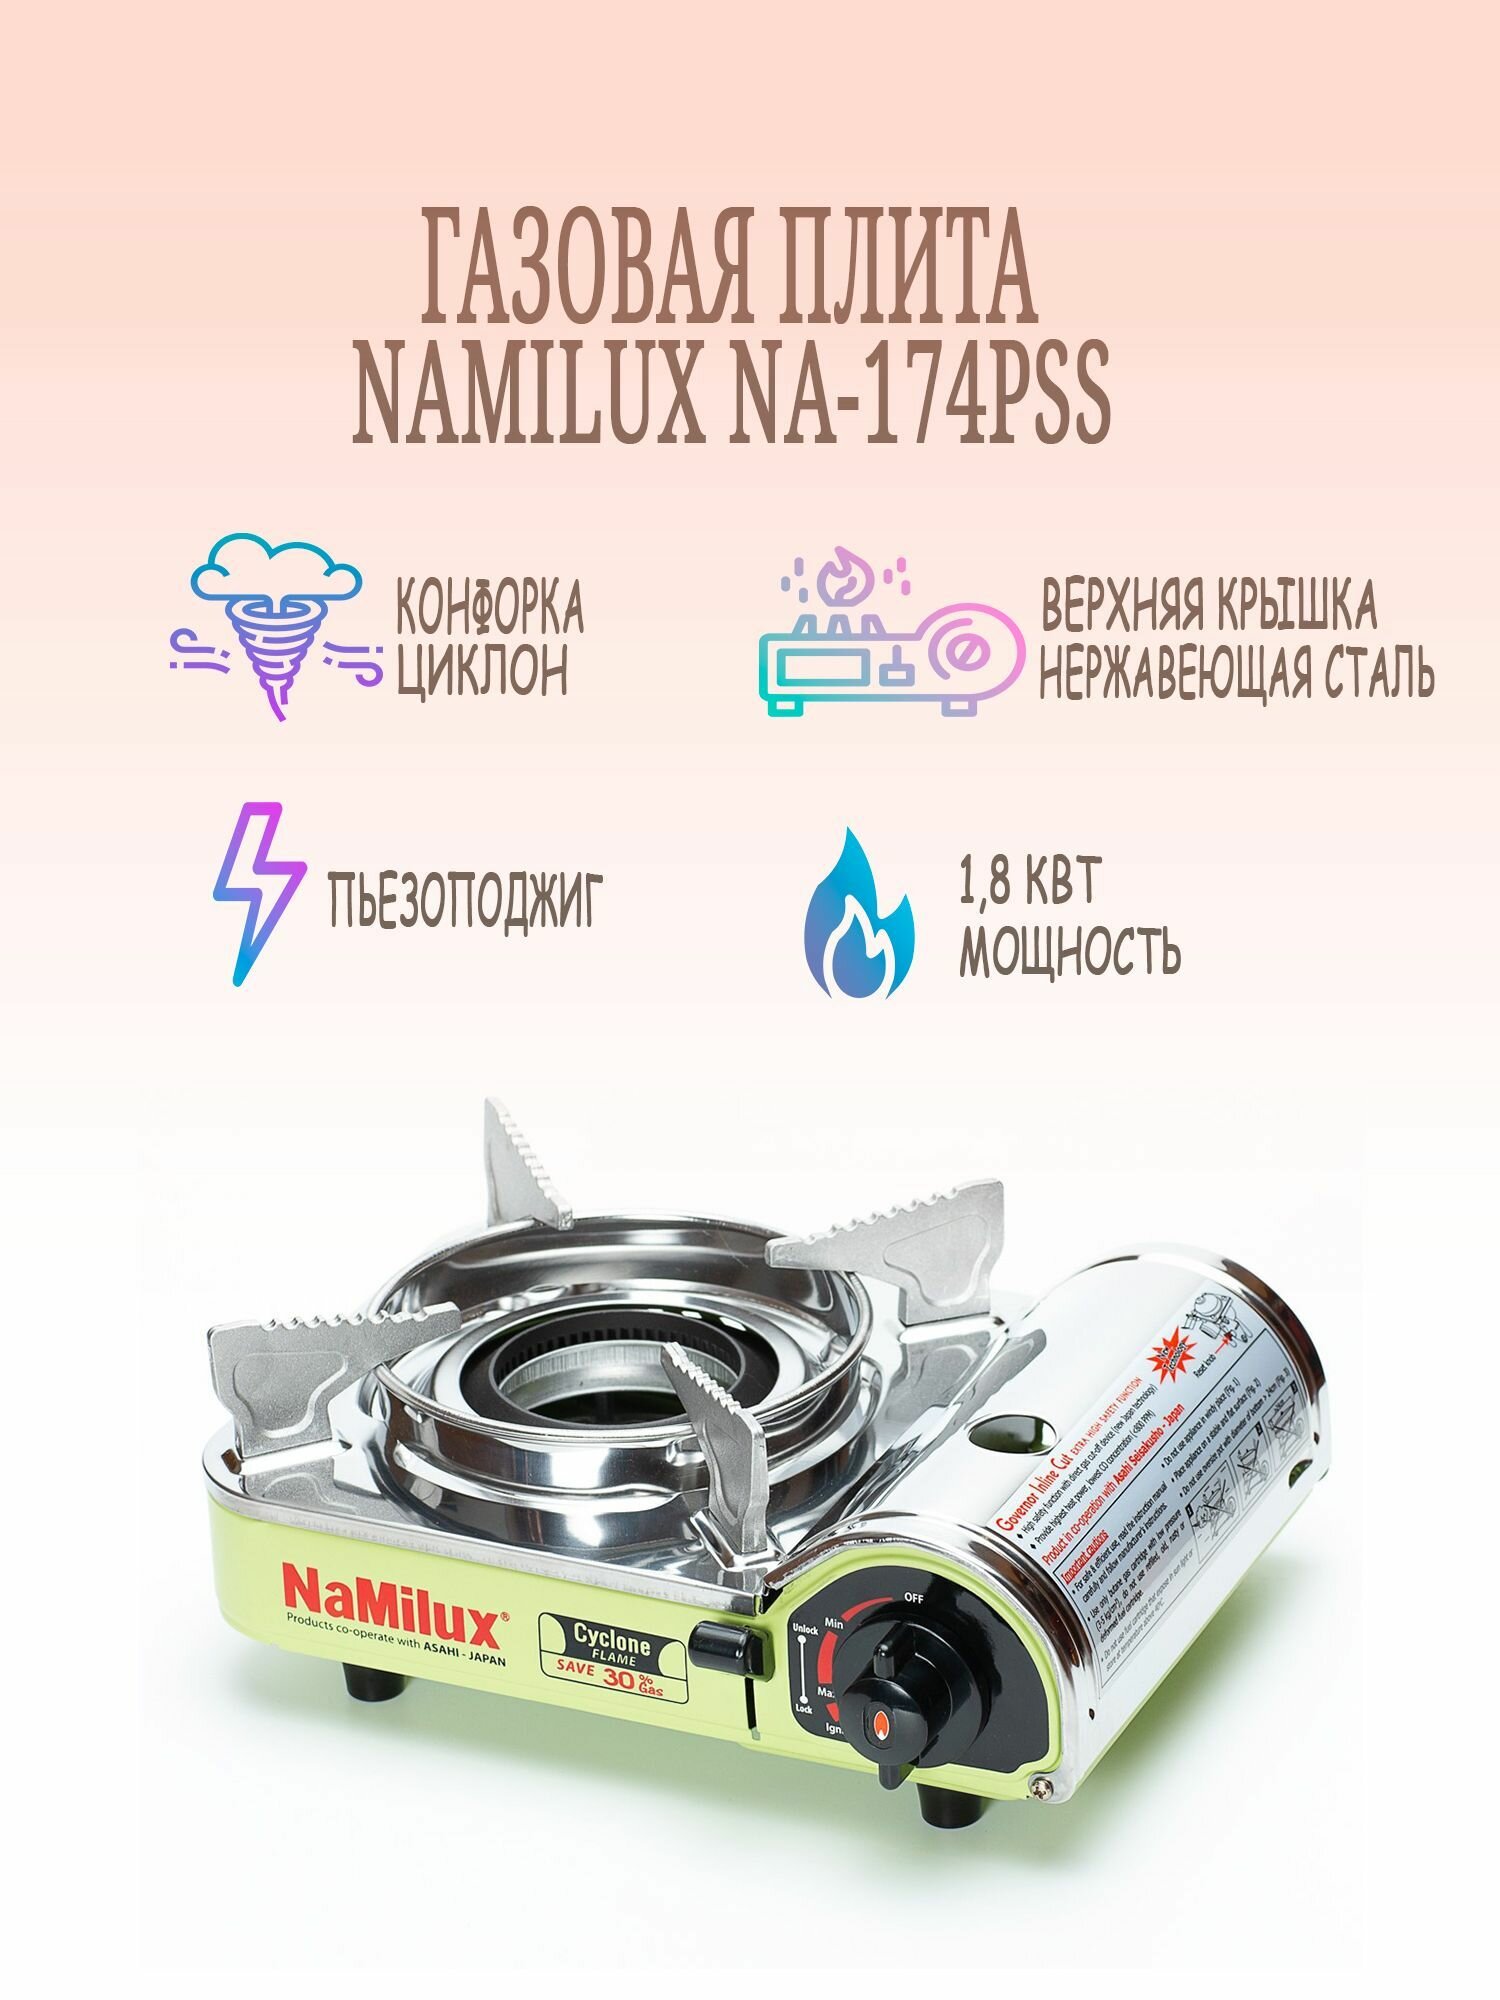 Газовая походная плита NaMilux NA-3761PX (174PS)